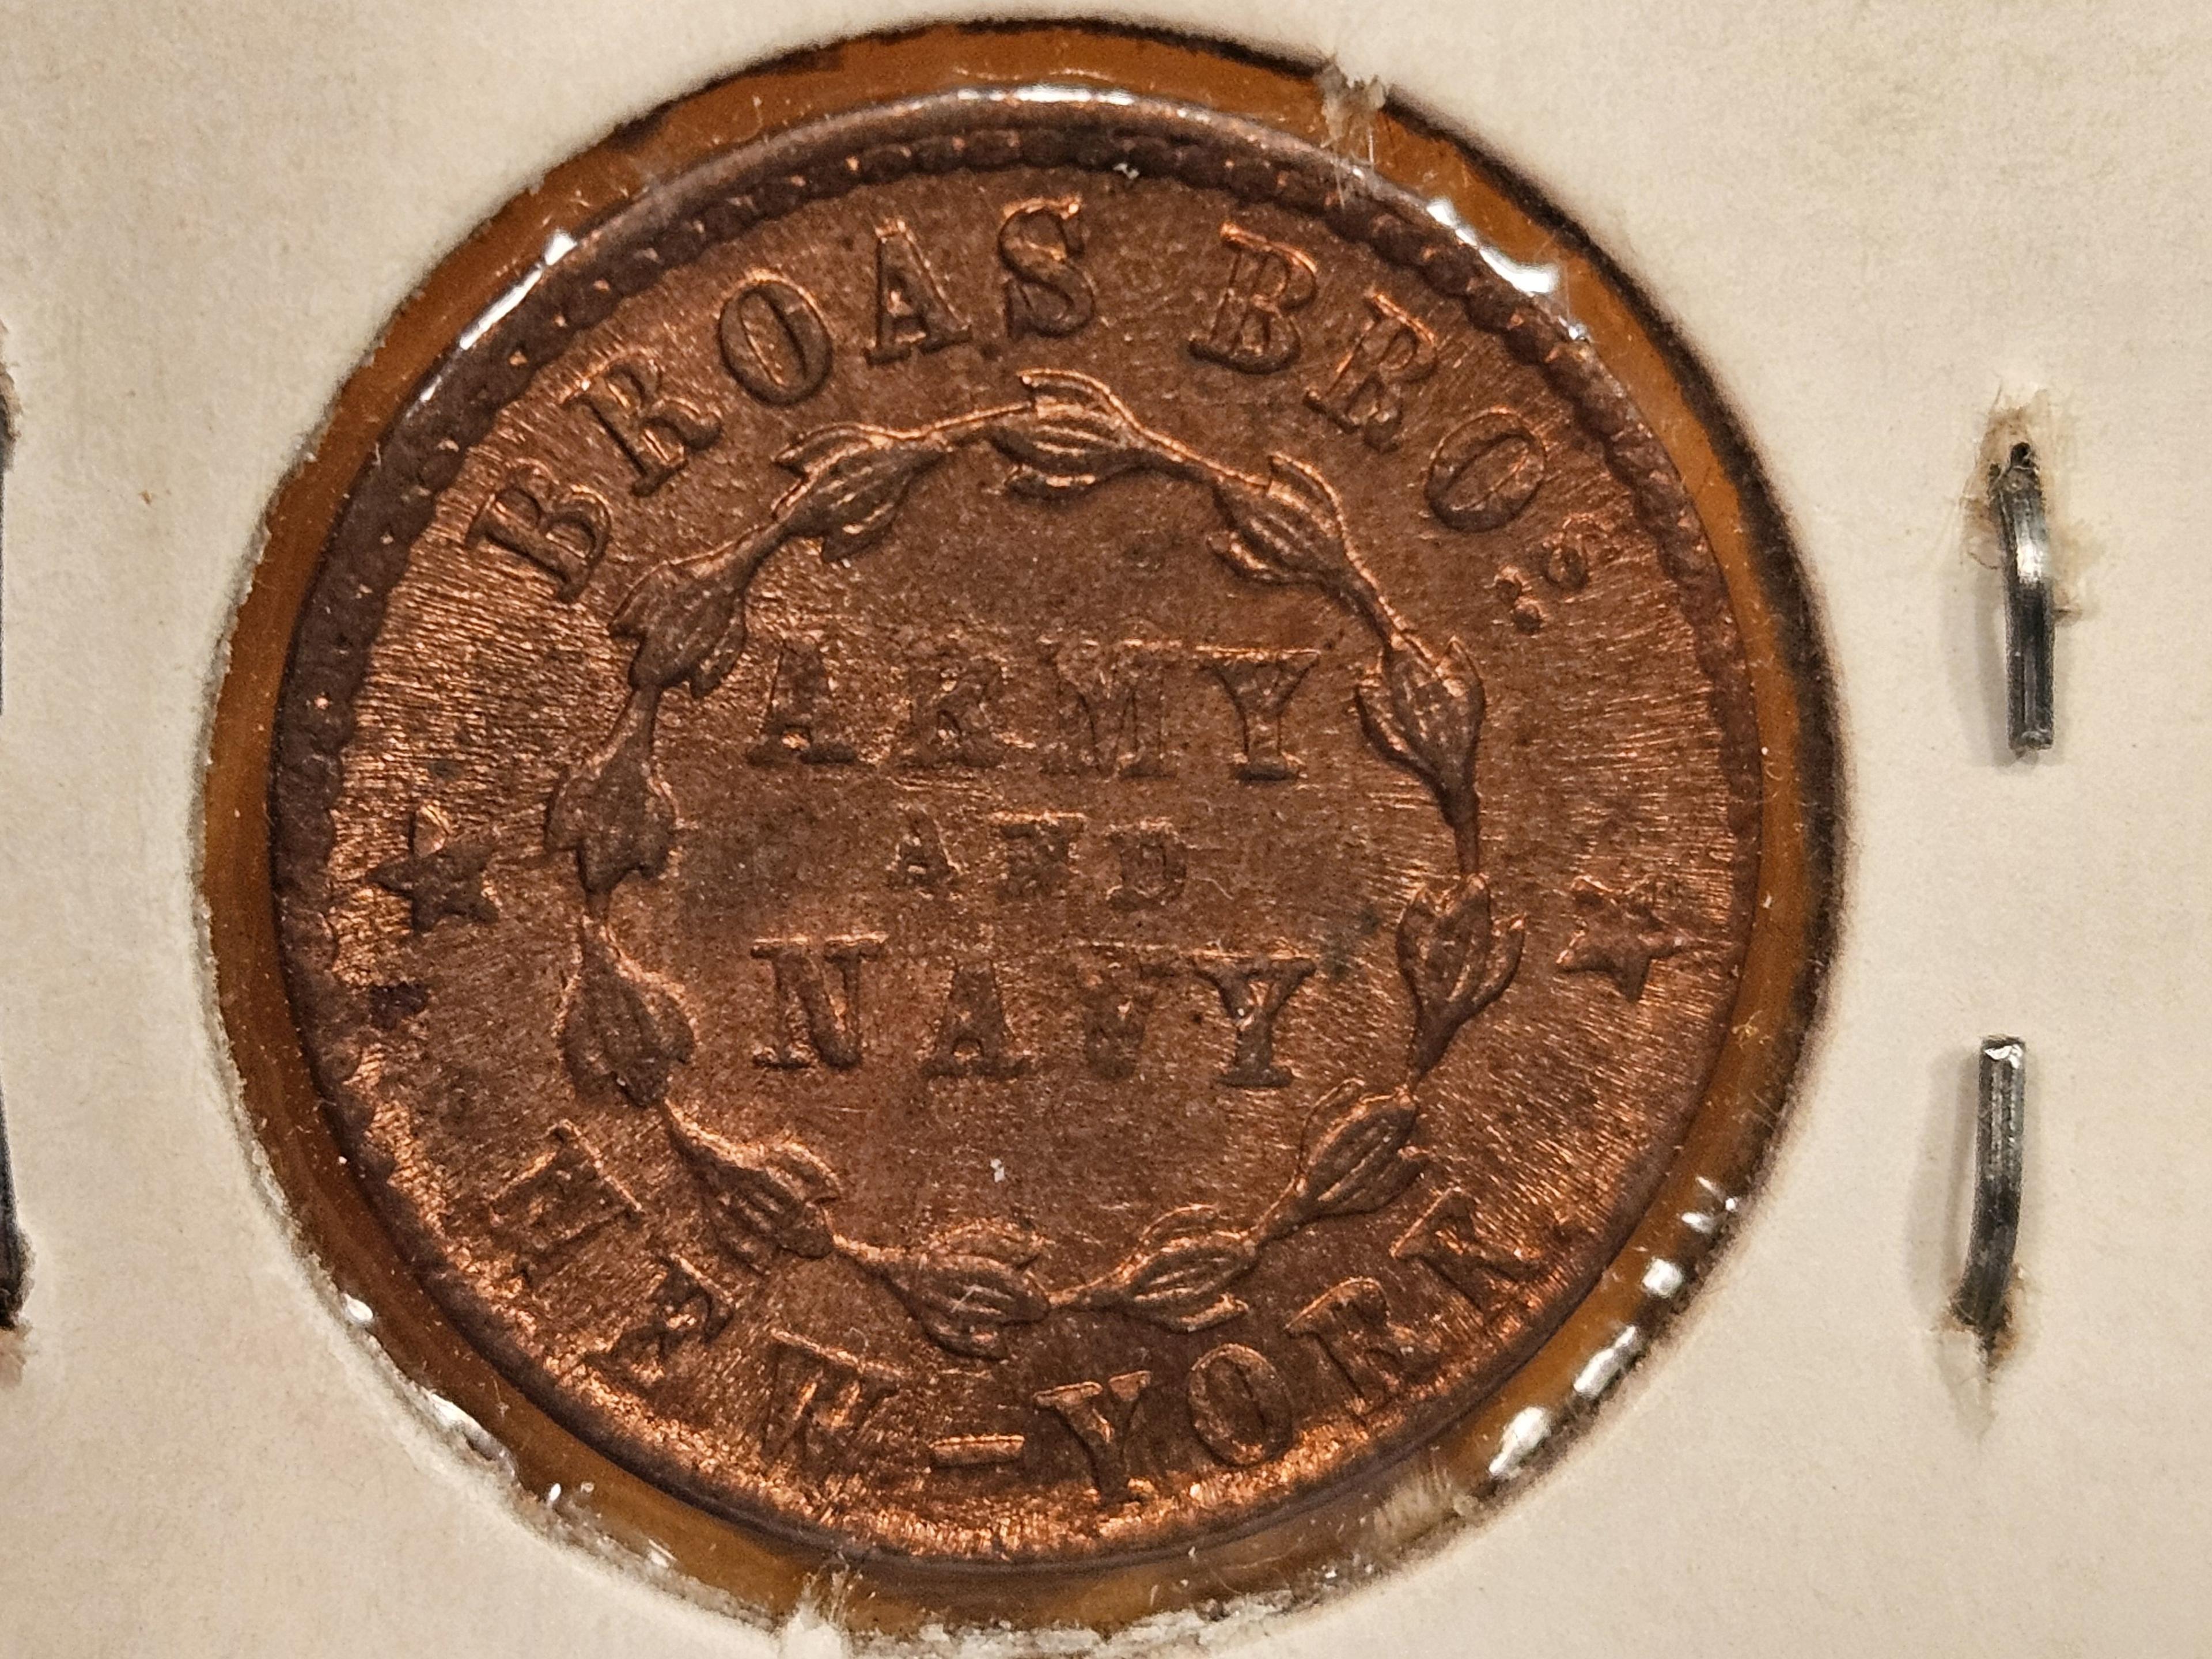 Civil War Token Merchant's Store Card in Uncirculated - details